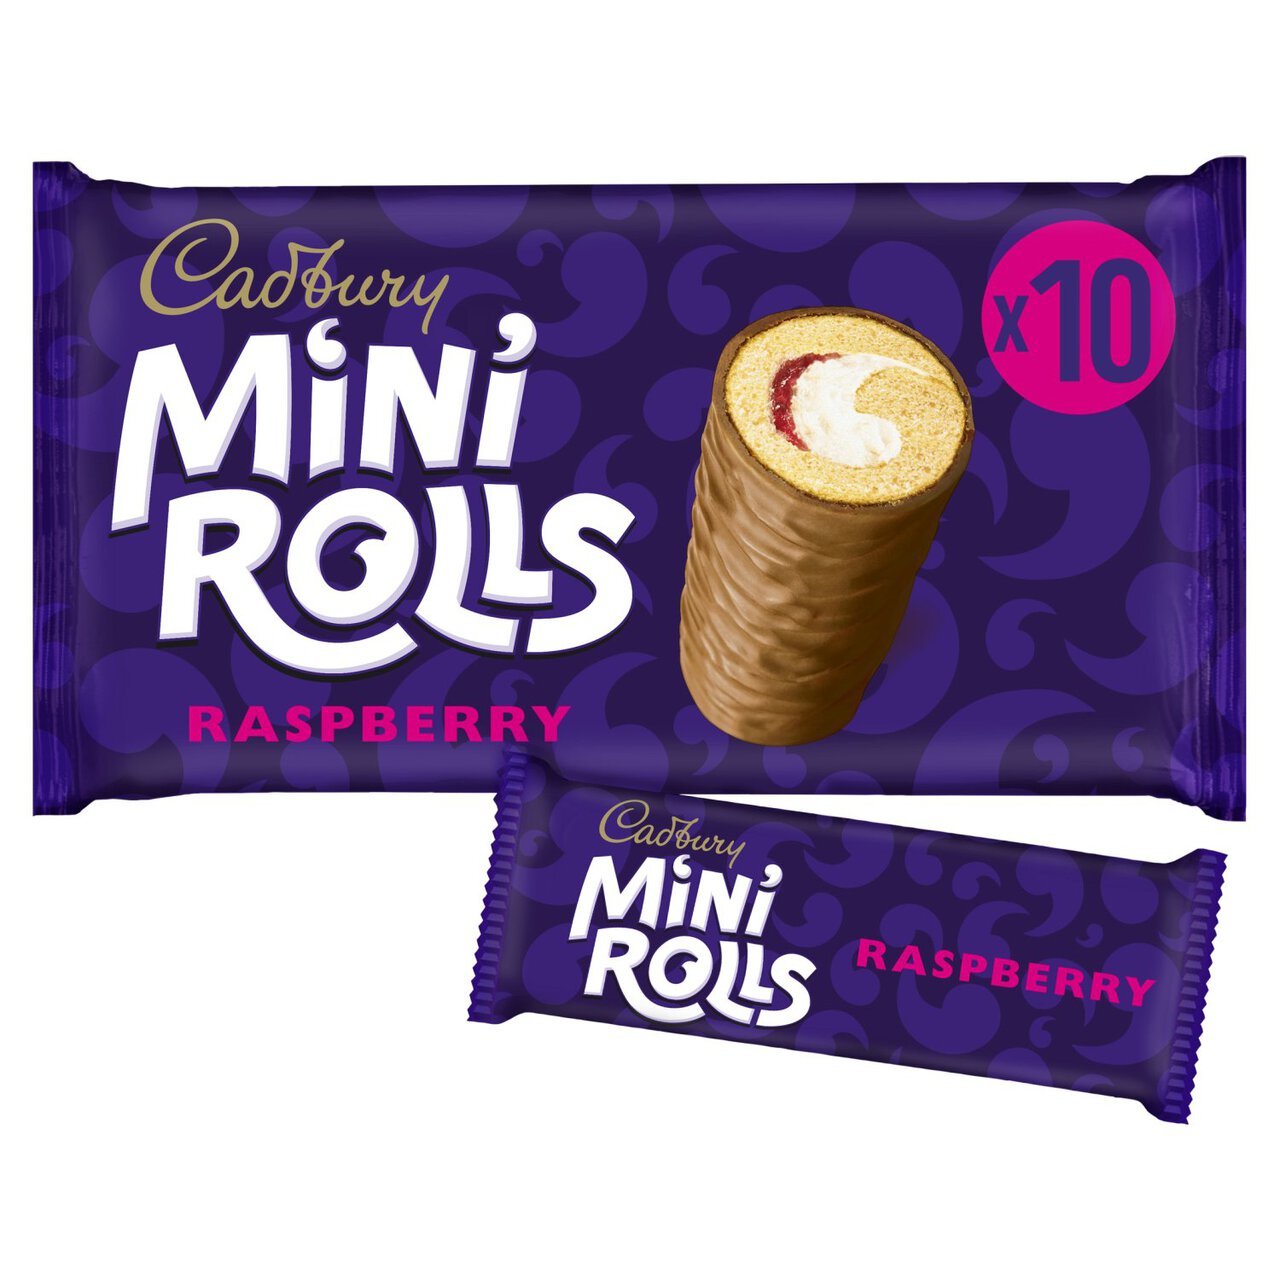 Cadbury Mini Rolls Raspberry Family Size 10 per pack